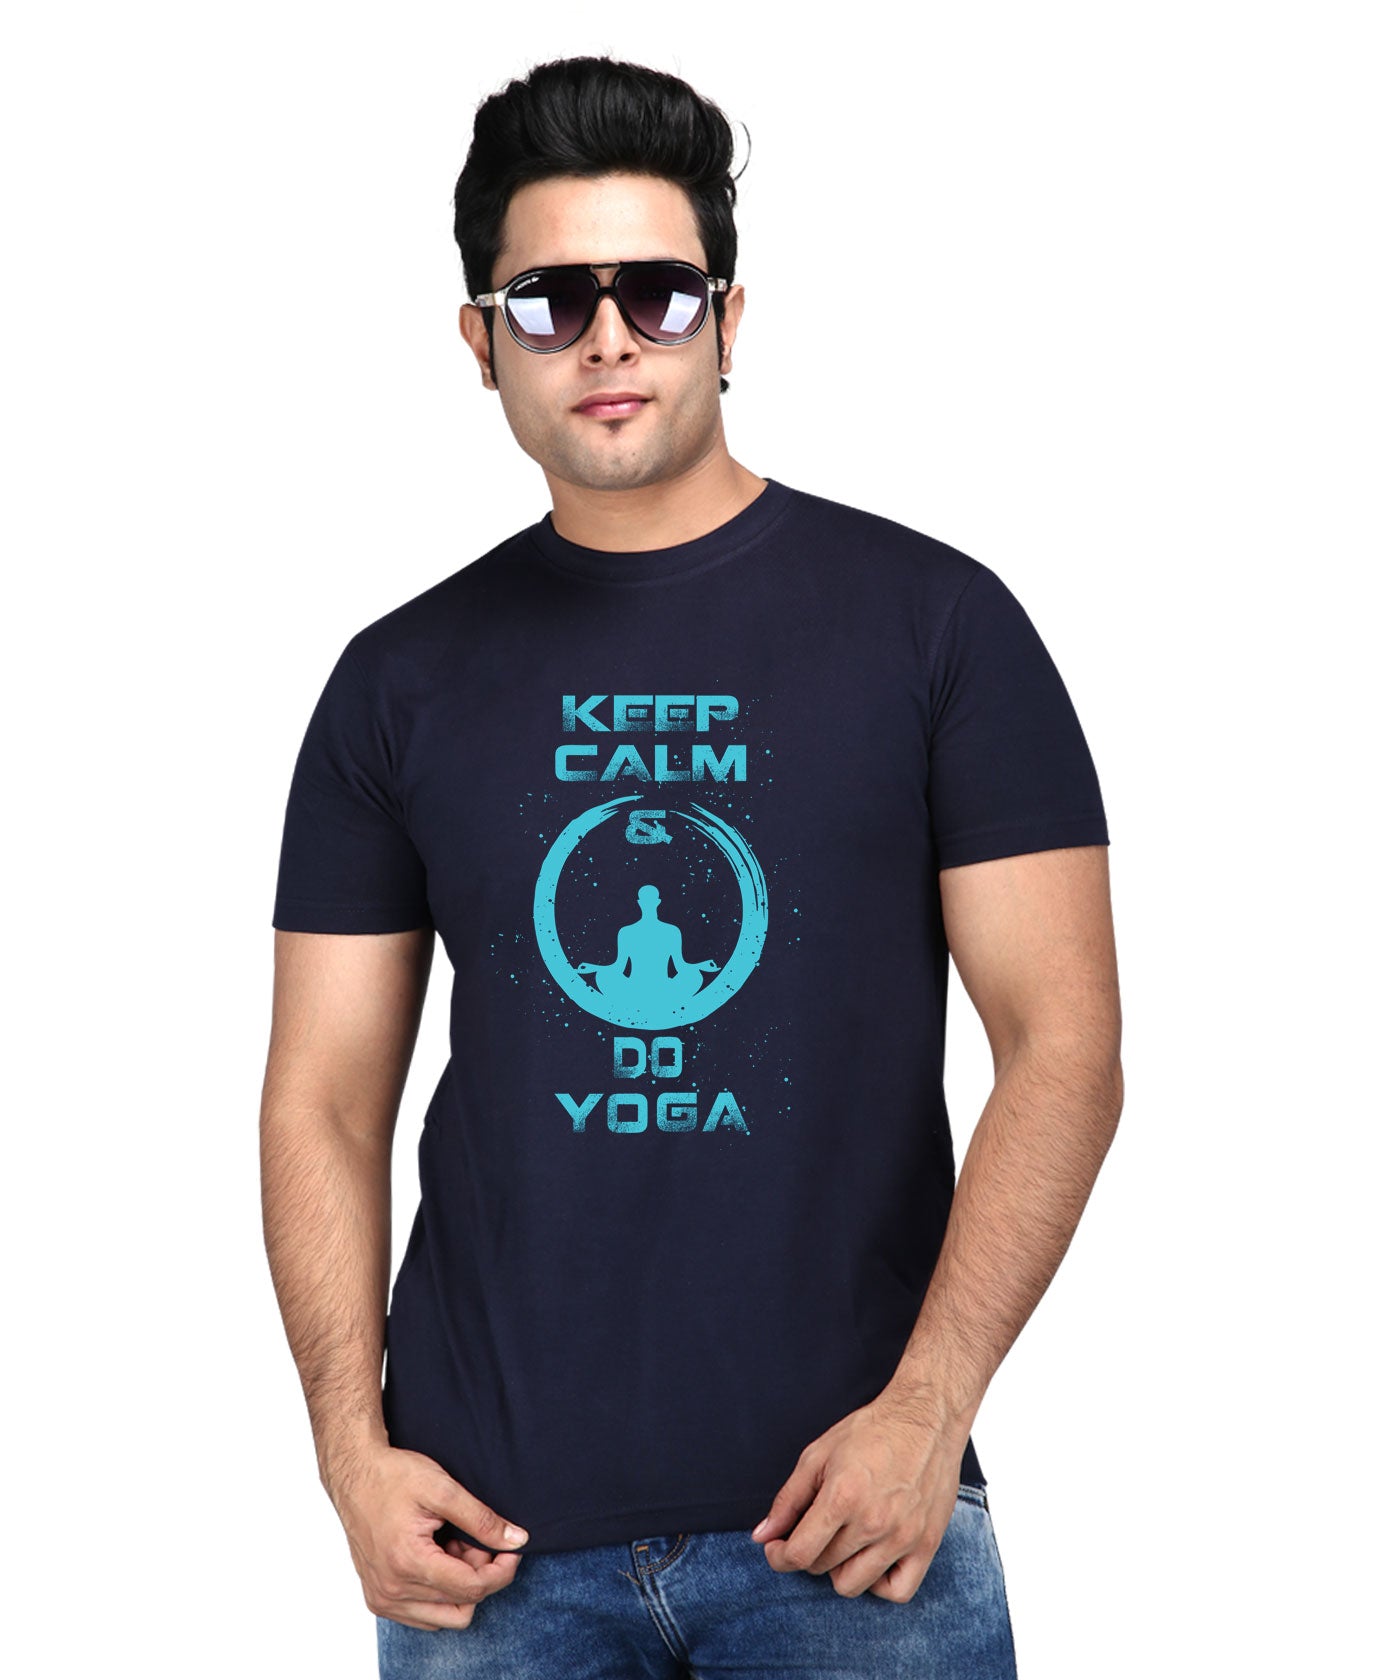 Keep Calm and Do Yoga - Premium Round Neck Cotton Tees for Men - Navy Blue